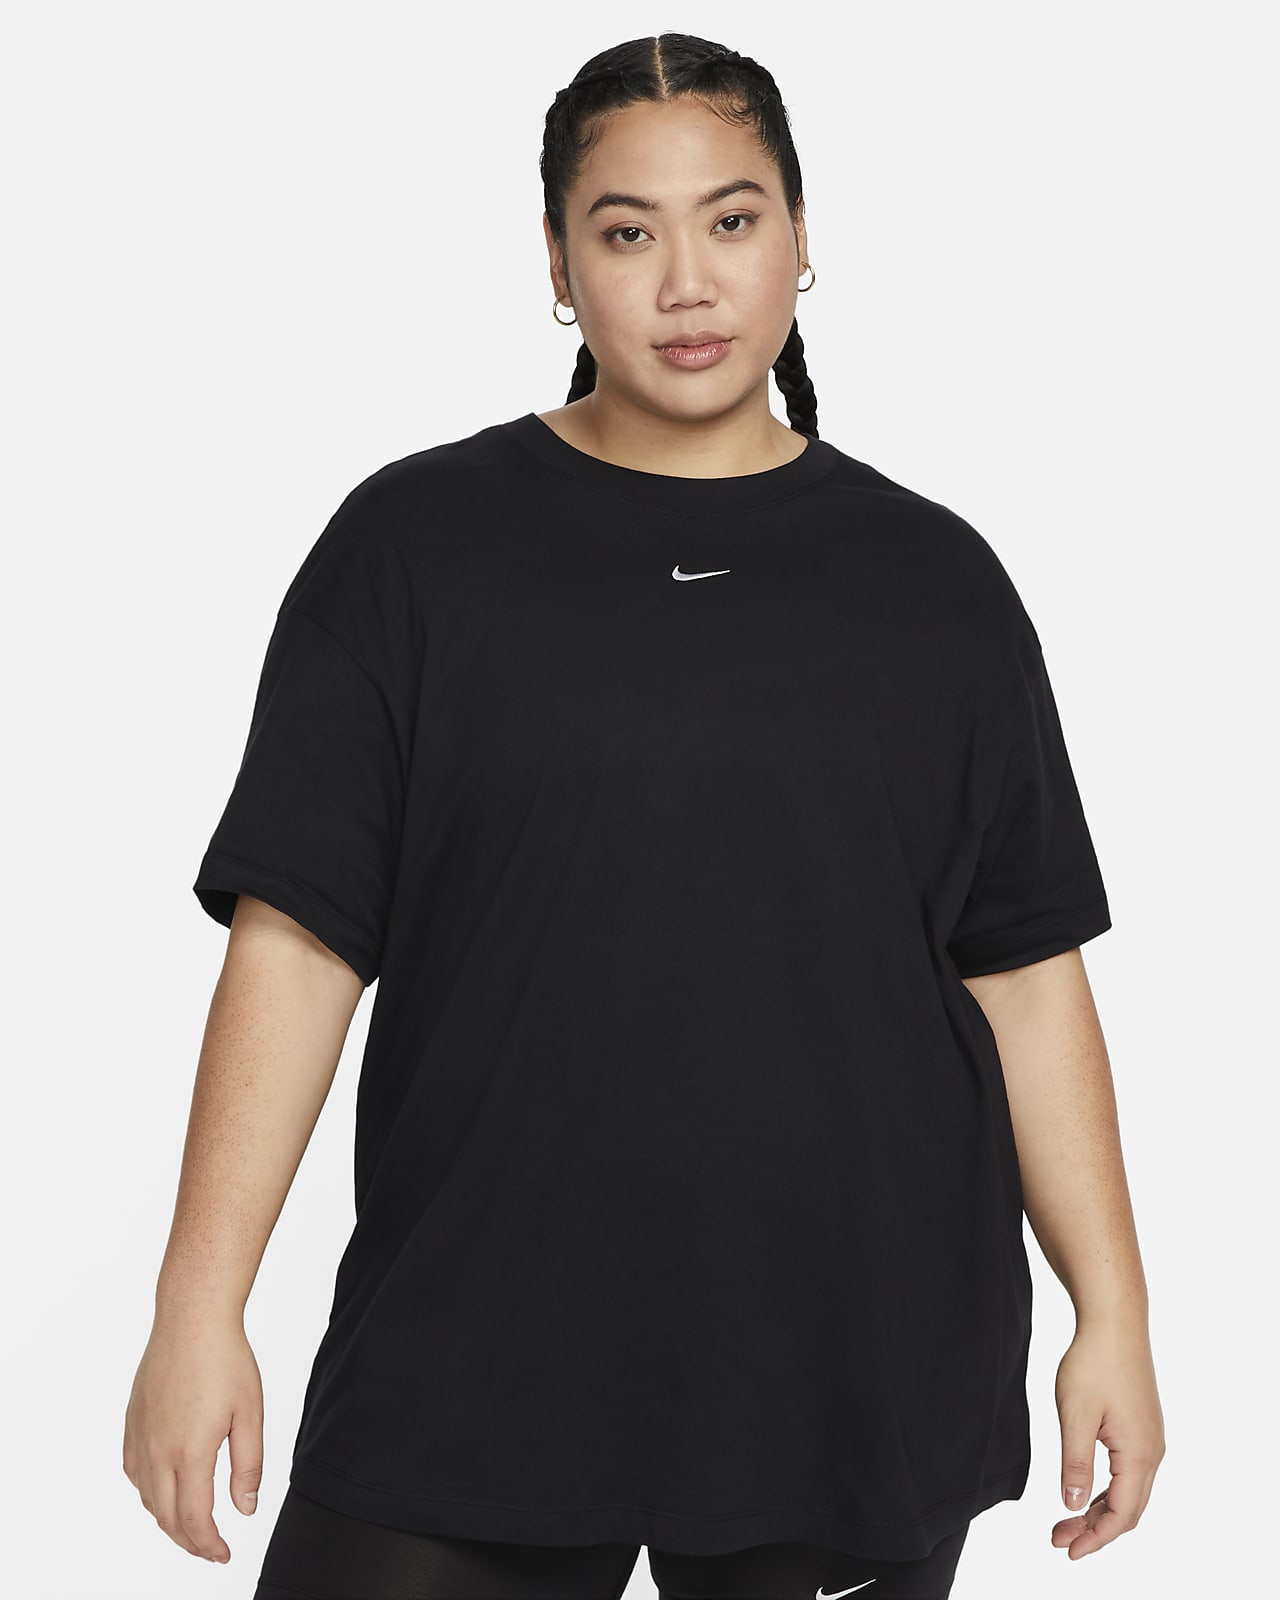 Playera para mujer (talla grande) Nike Sportswear Essential